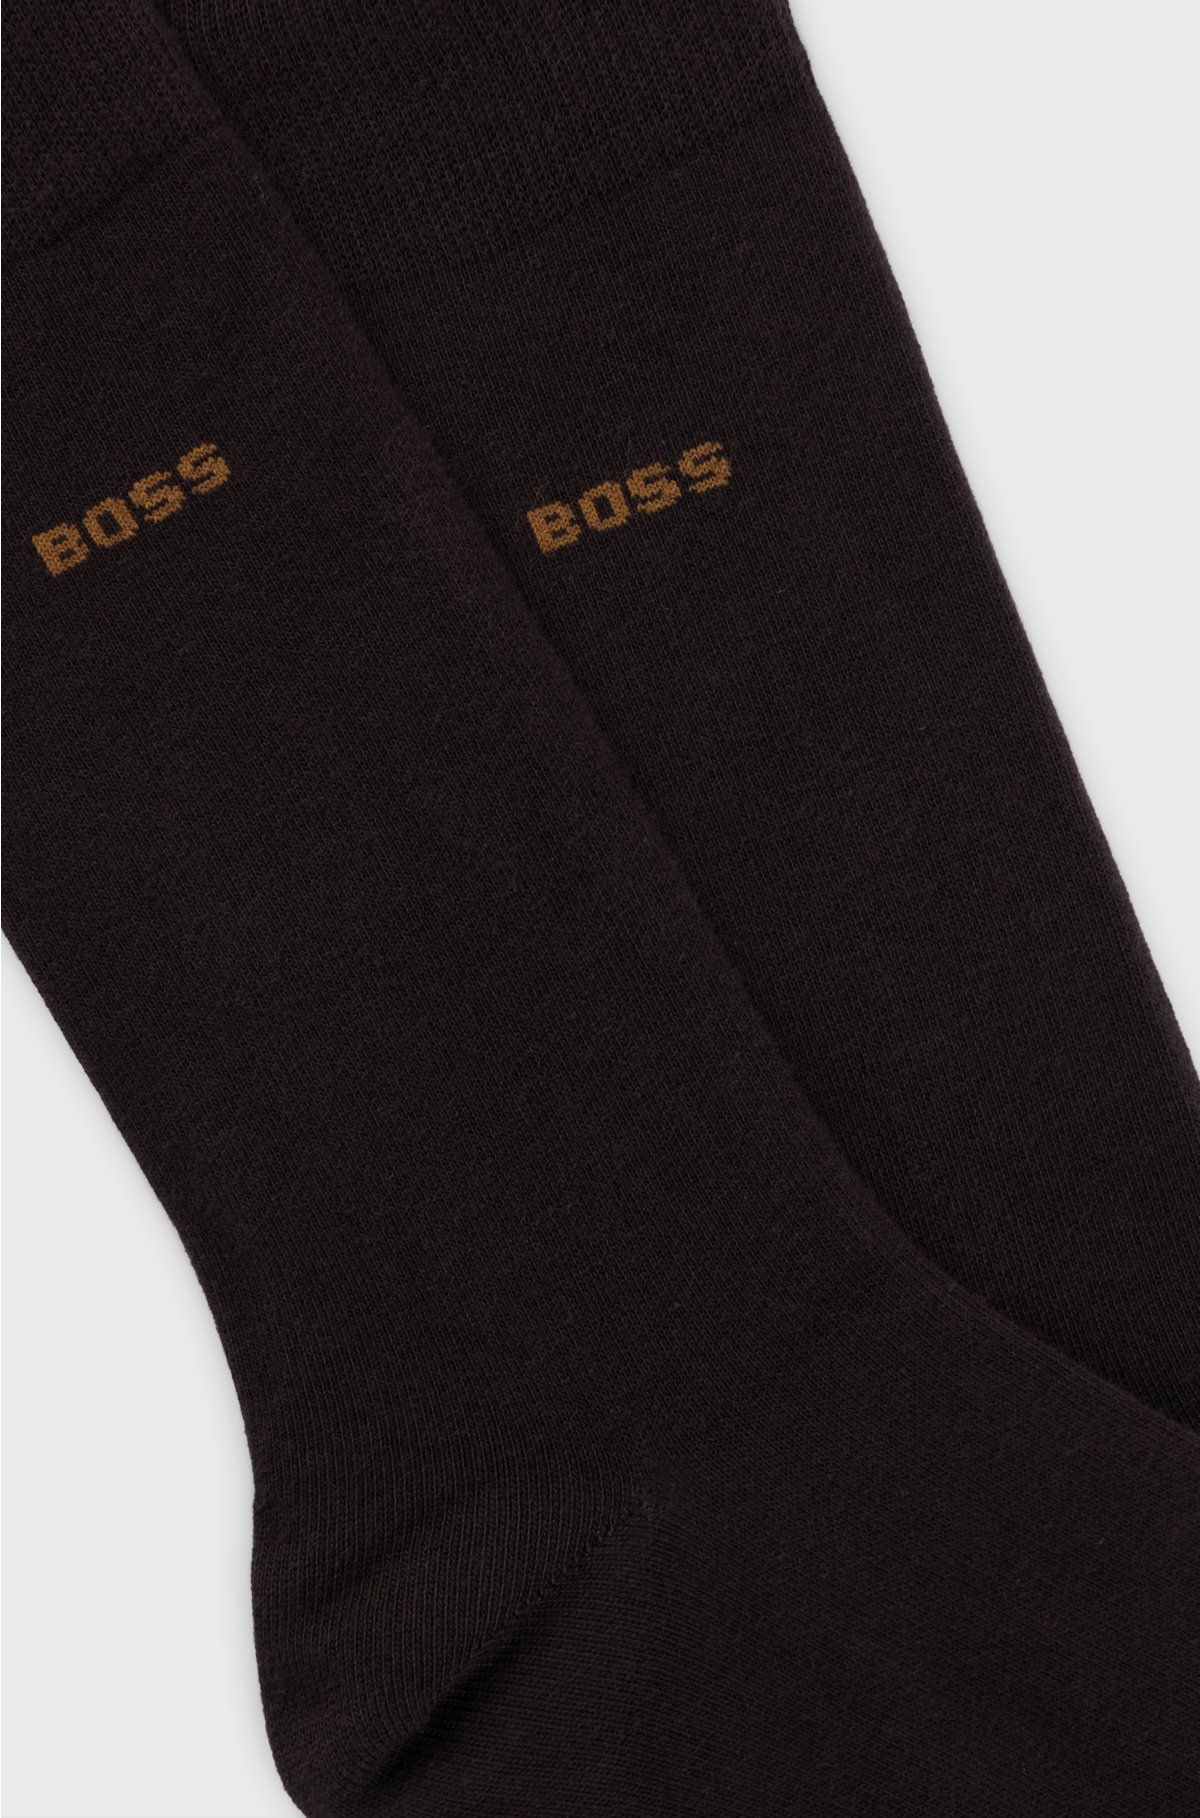 Two-pack of regular-length socks in a cotton blend, Dark Brown